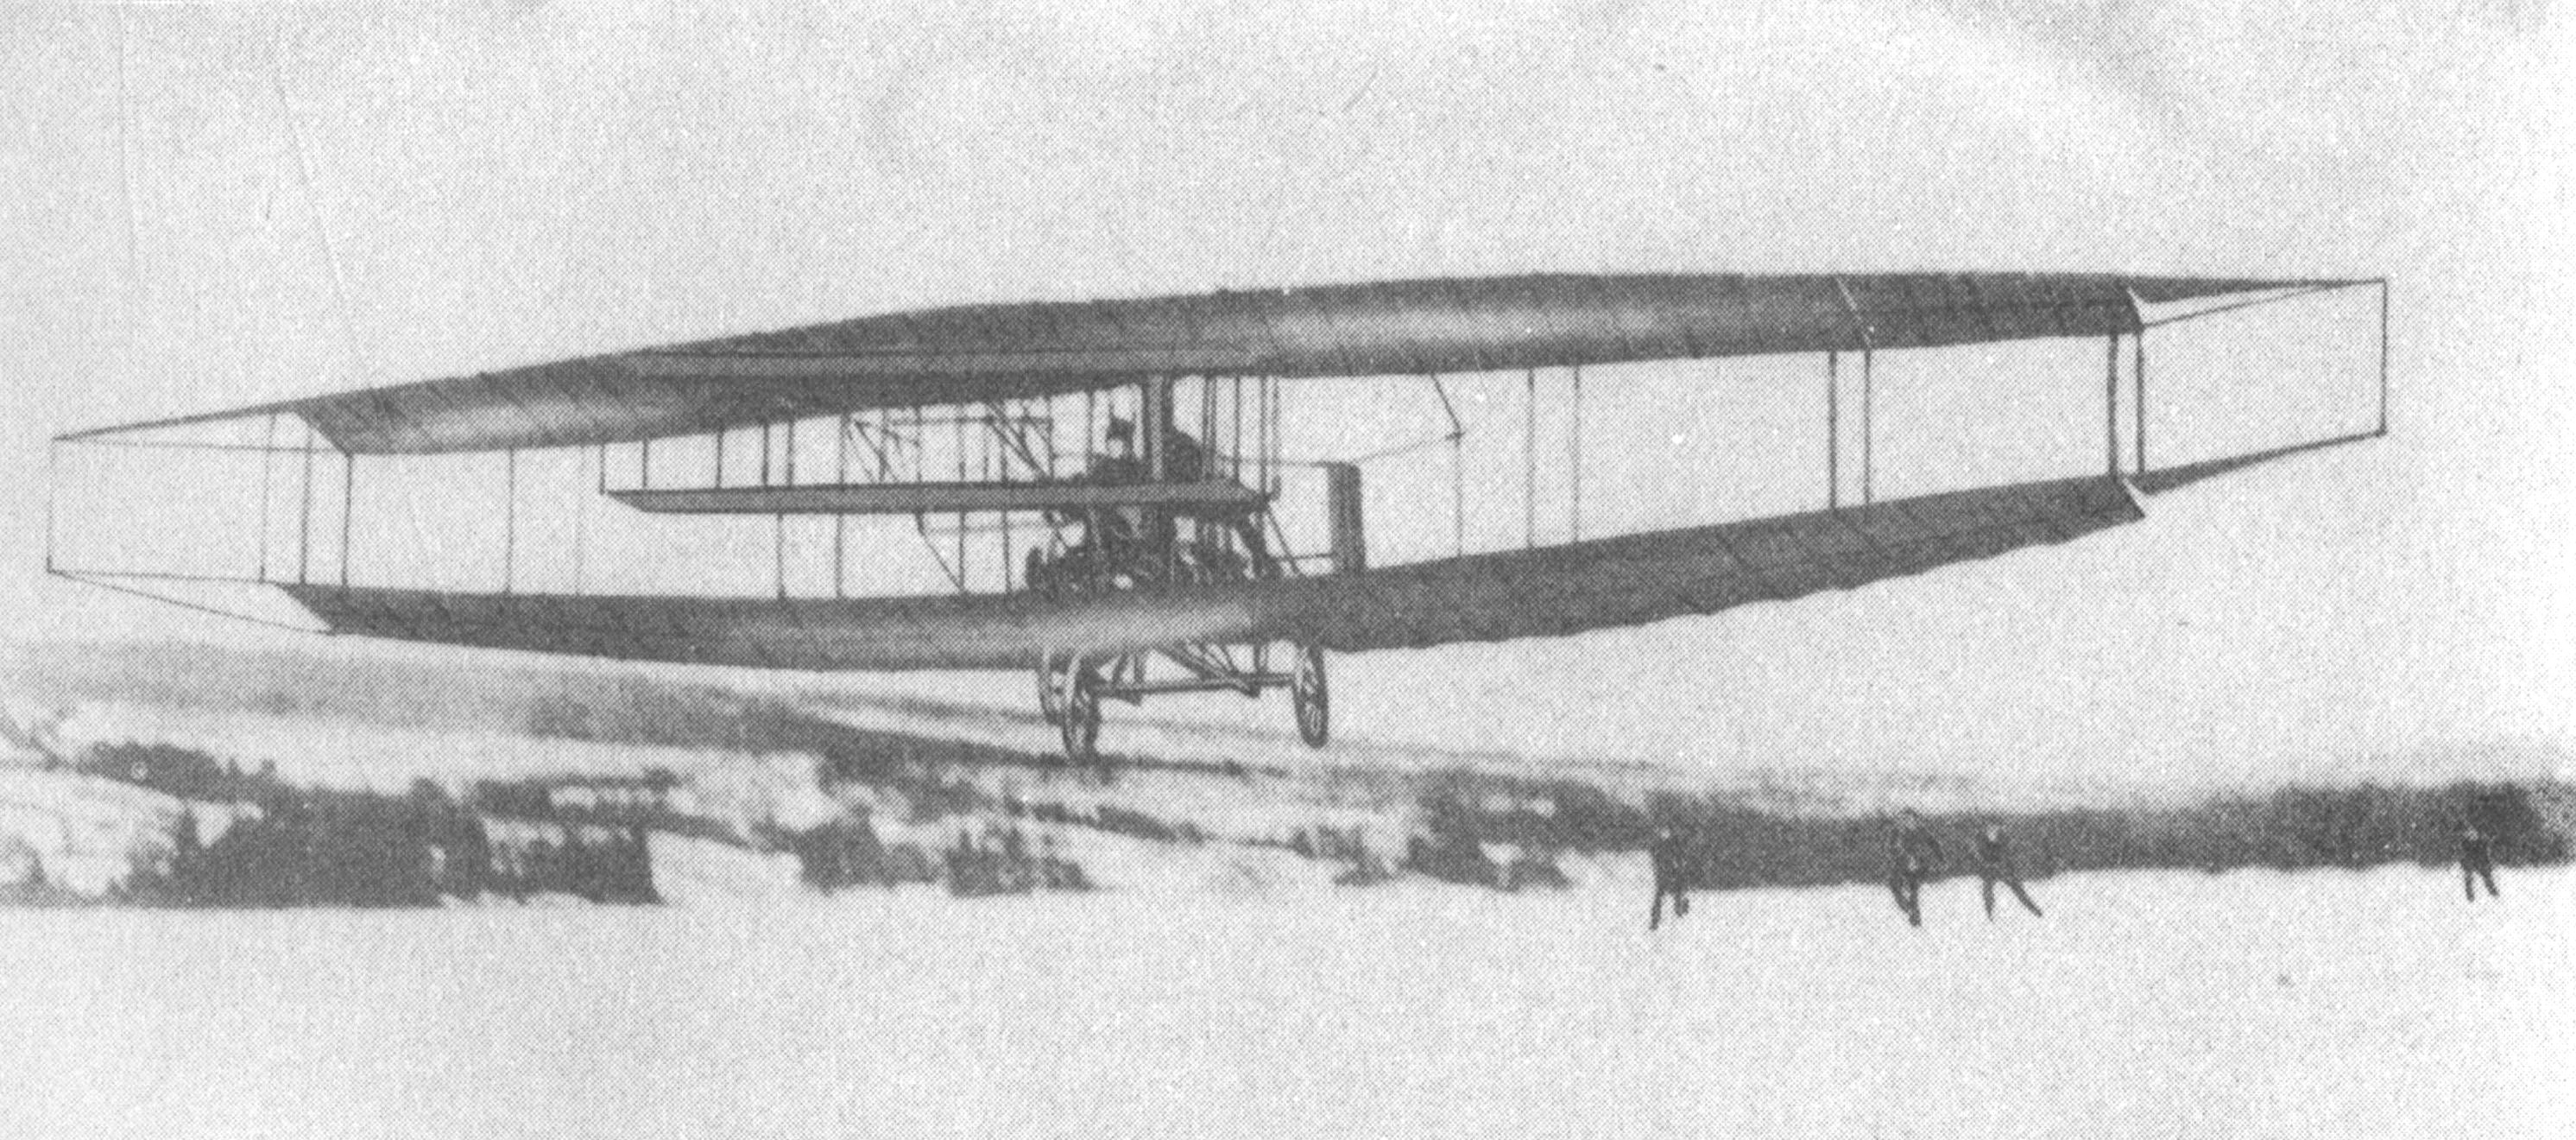 Douglas McCurdy flying the “Silver Dart” at Baddeck, N.S.